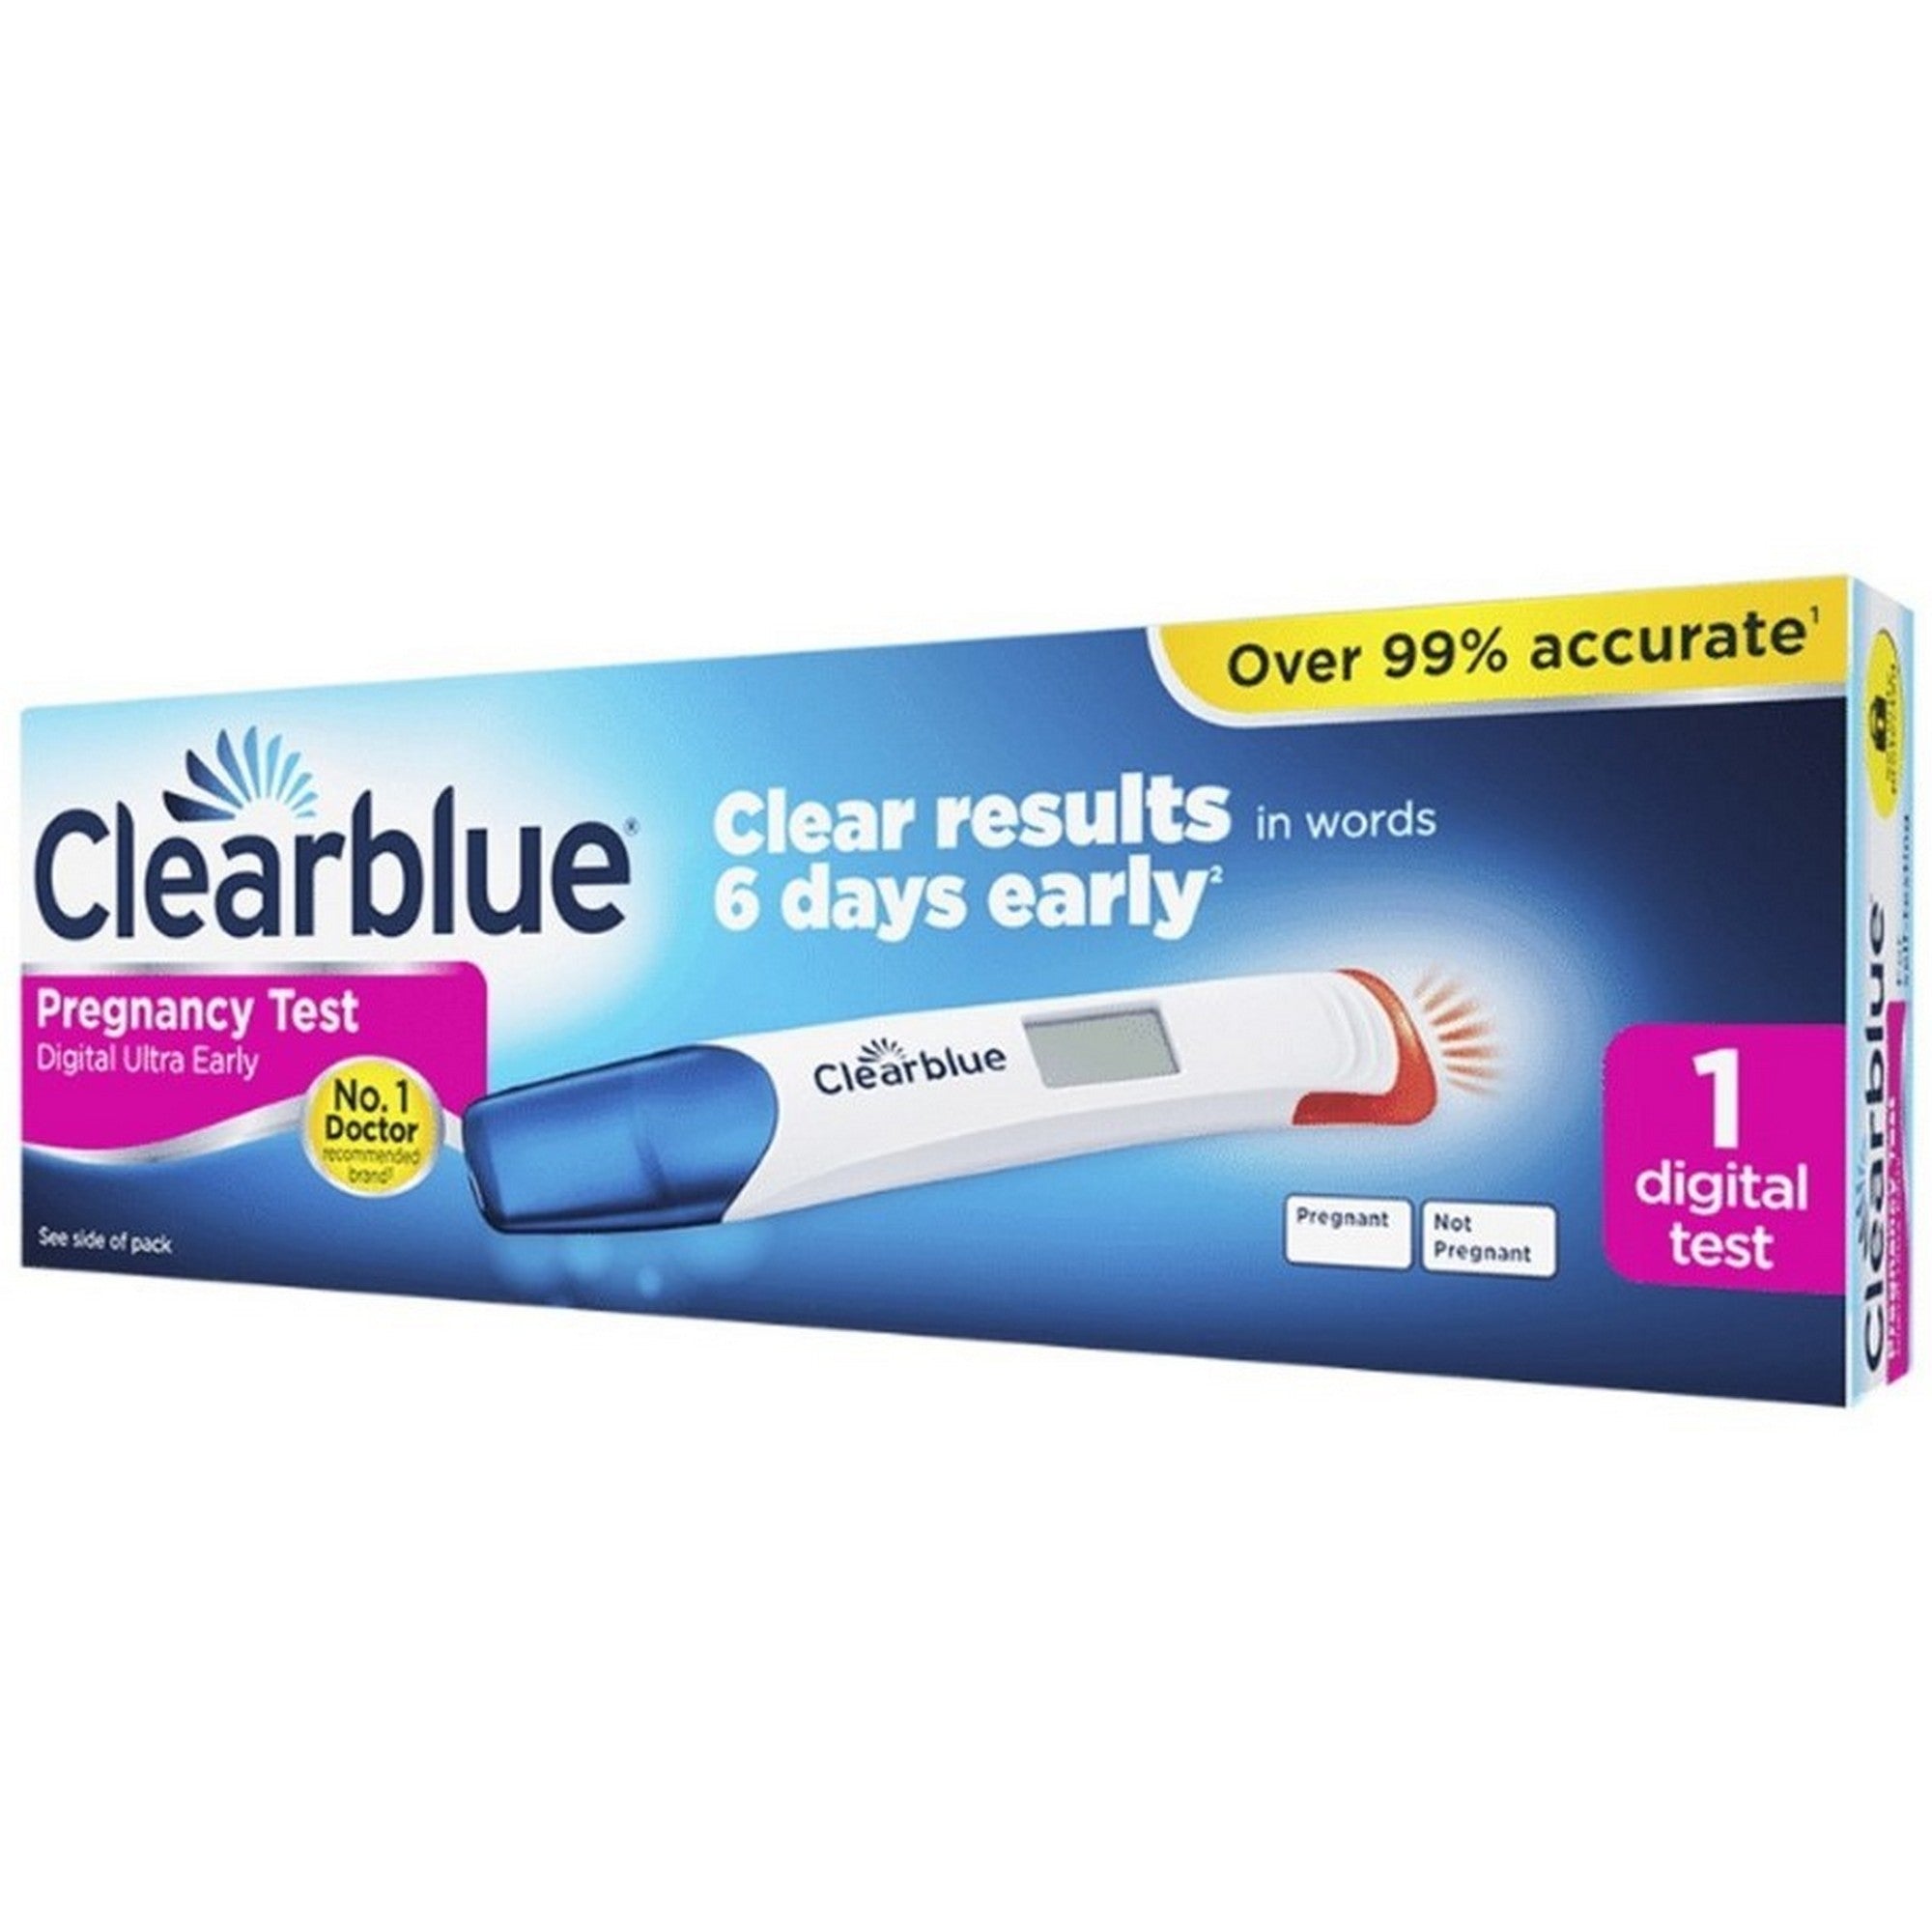 Clearblue Digital Ultra Early Pregnancy Test - 1 Digital Test